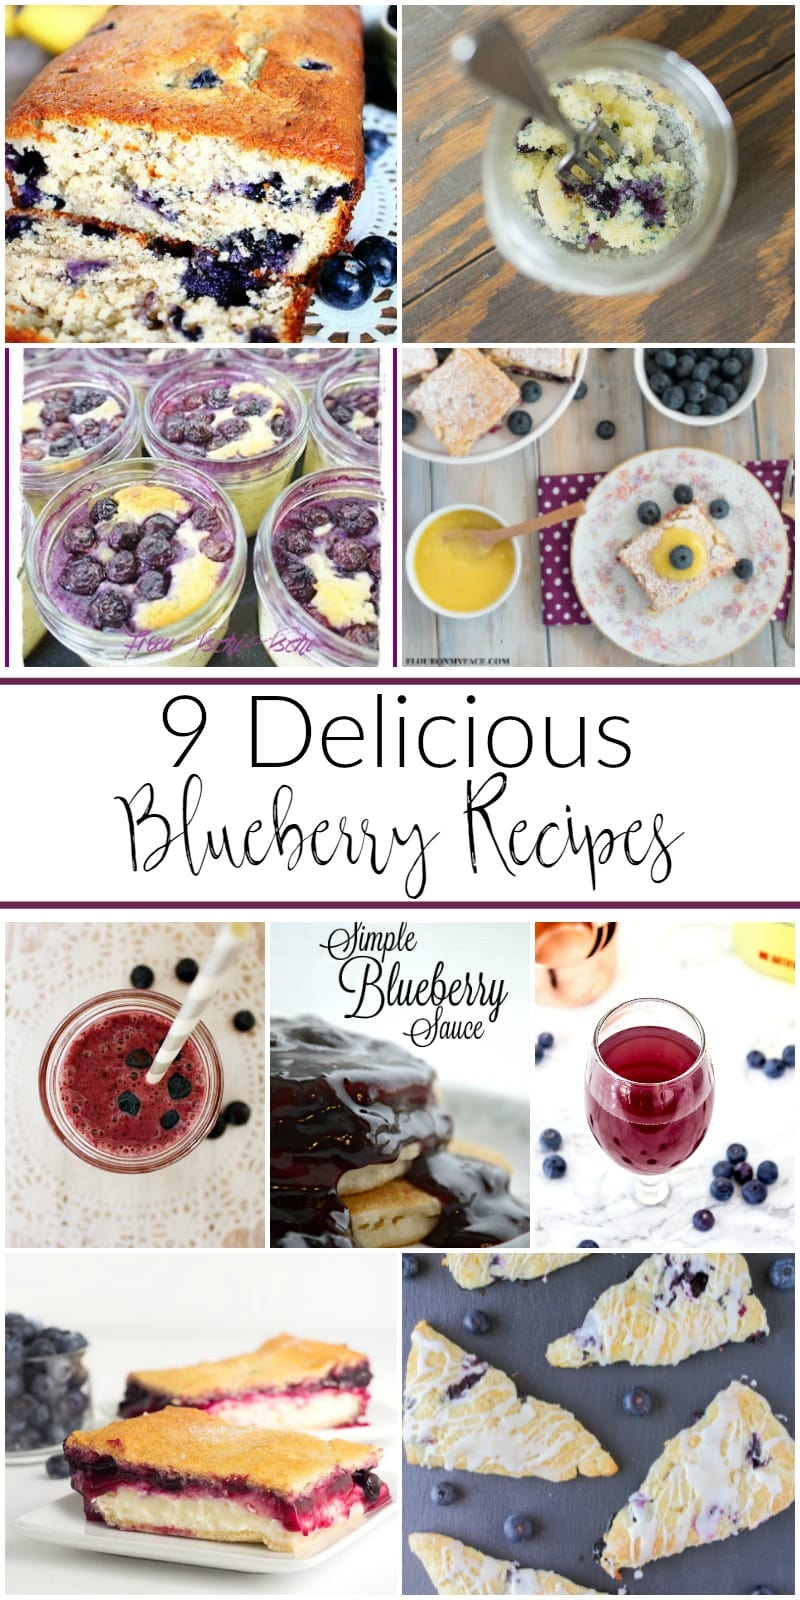 9 Delicious Blueberry Recipes